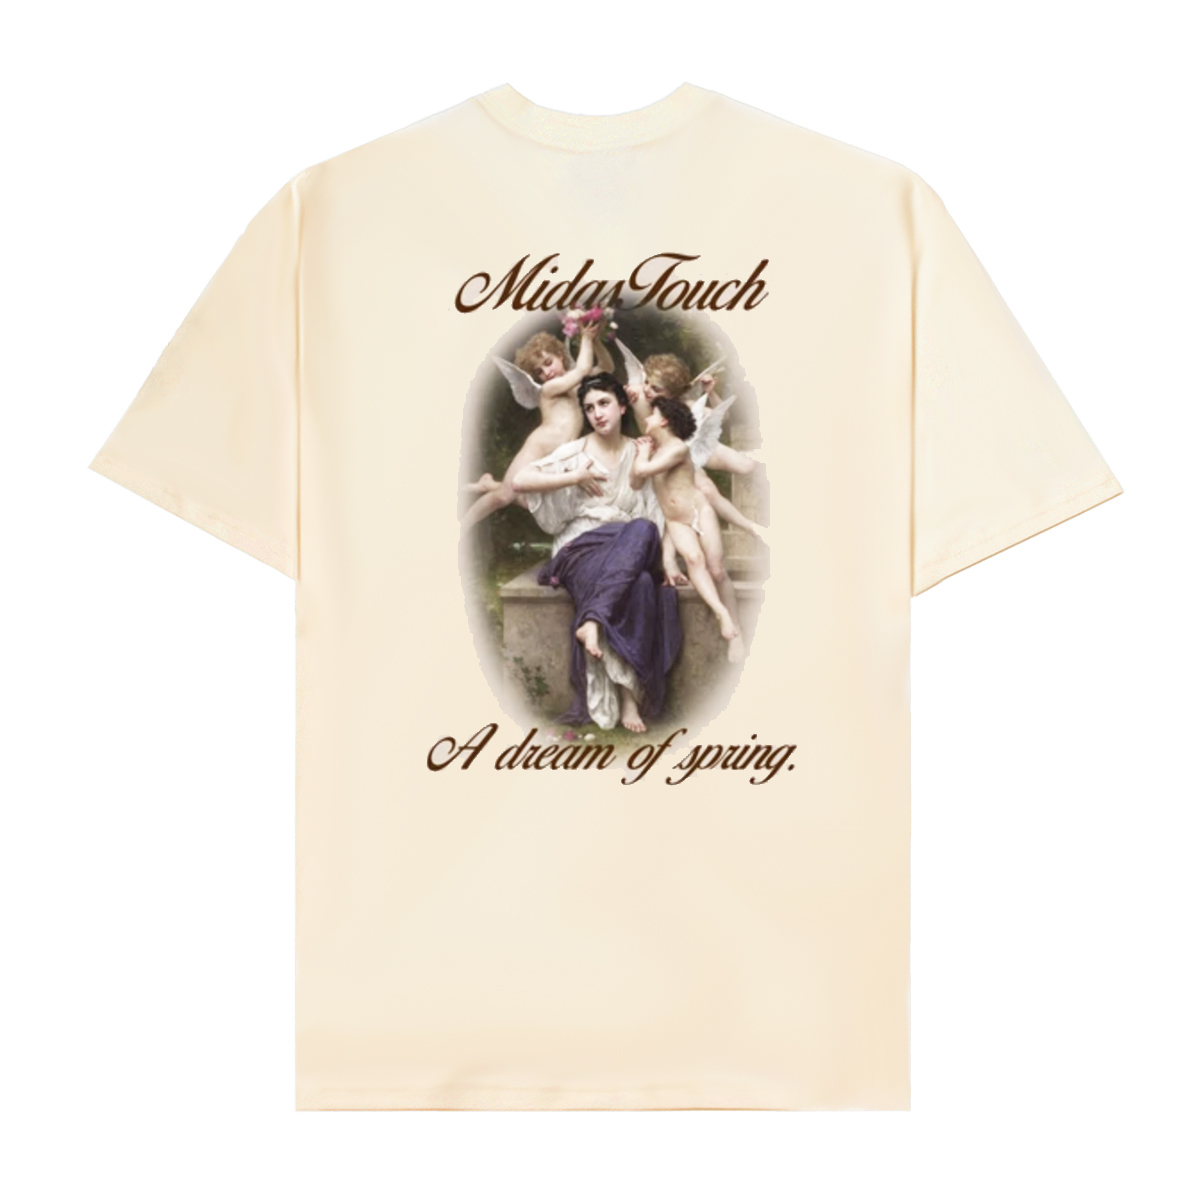 Camiseta Midas Touch Dream Of Spring Oversized (Off White)